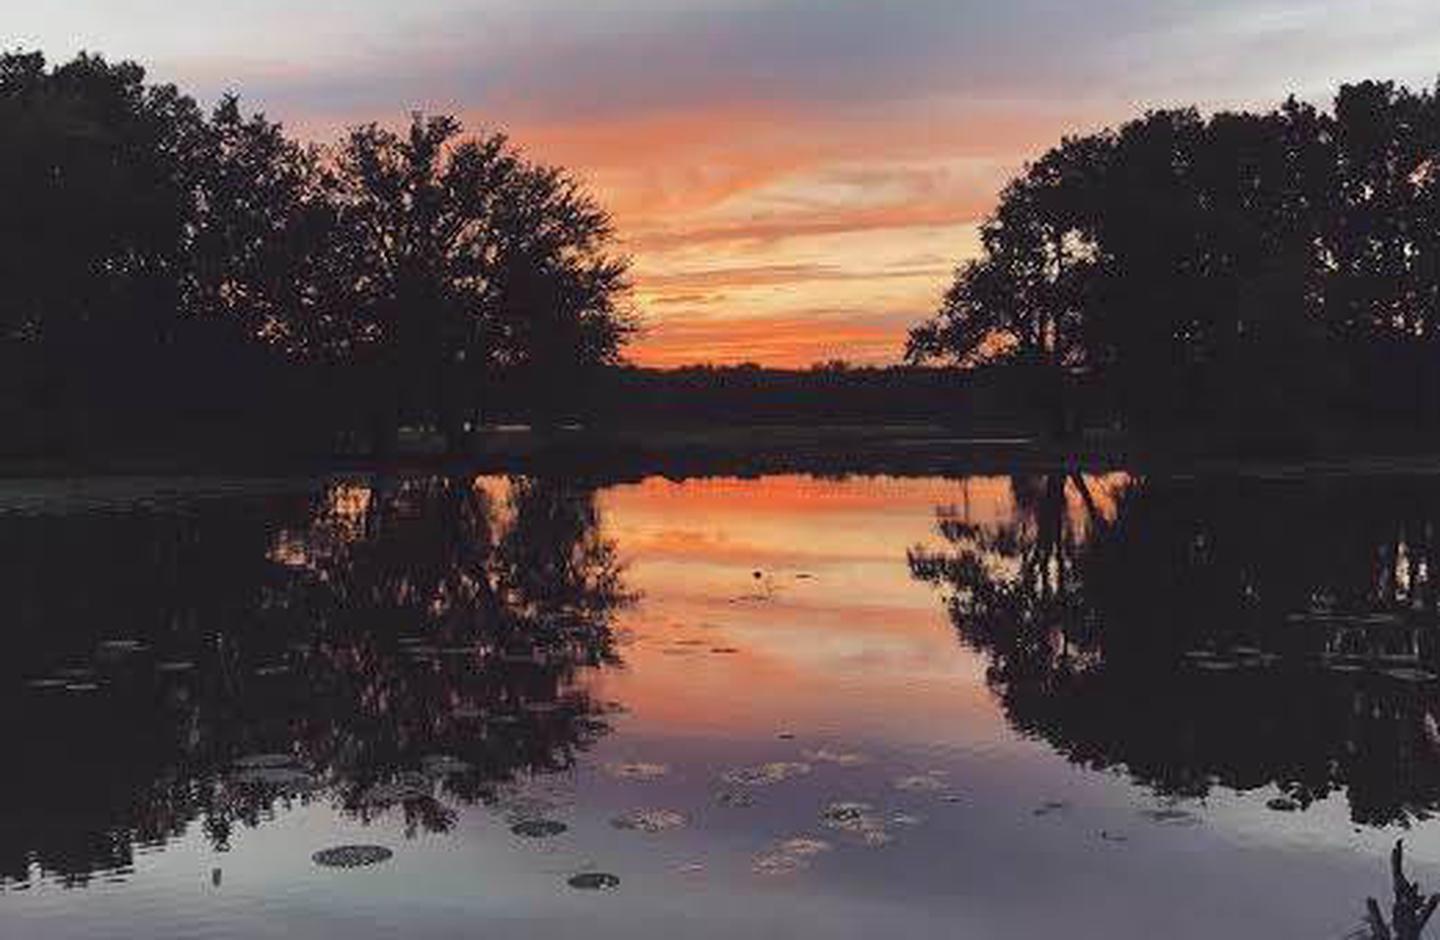 SunsetSunset along the banks of the Mississippi River at Blackhawk Park.